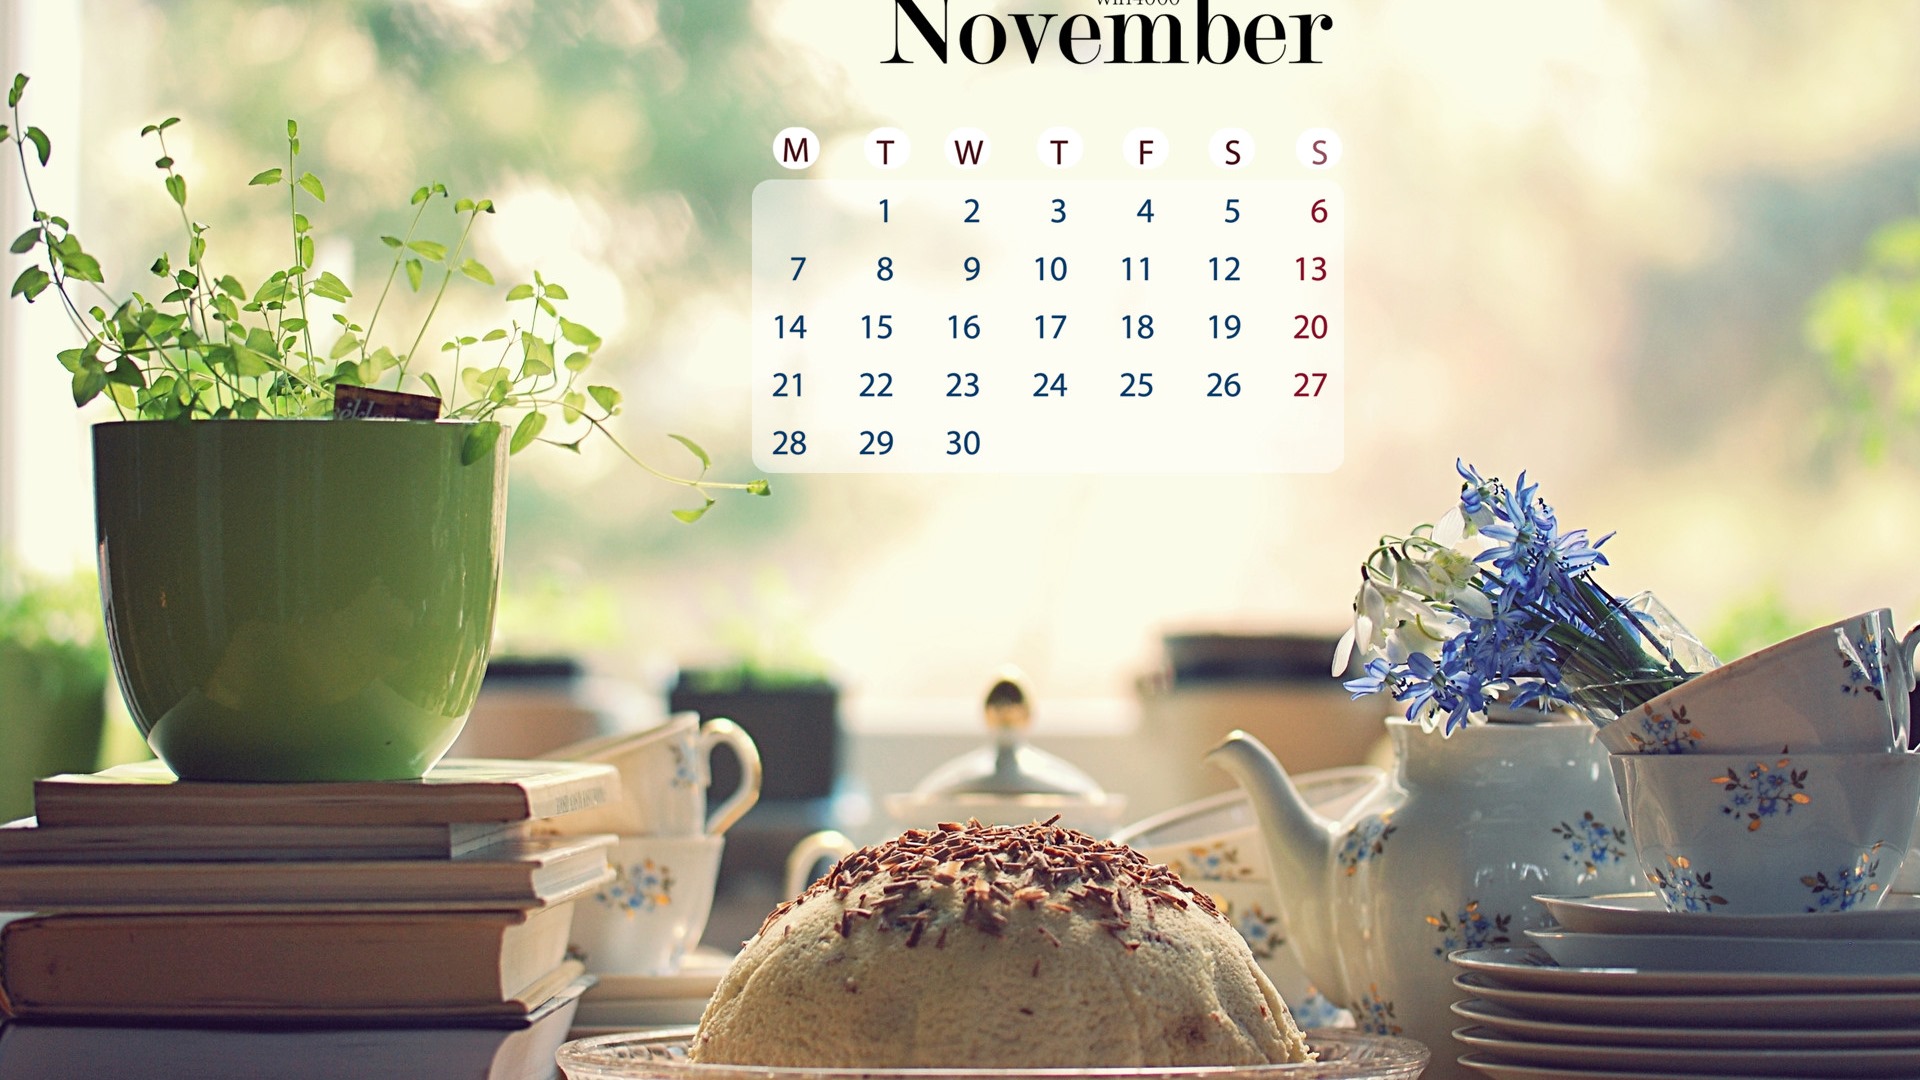 November 2016 Hintergrundbilder (1) #18 - 1920x1080